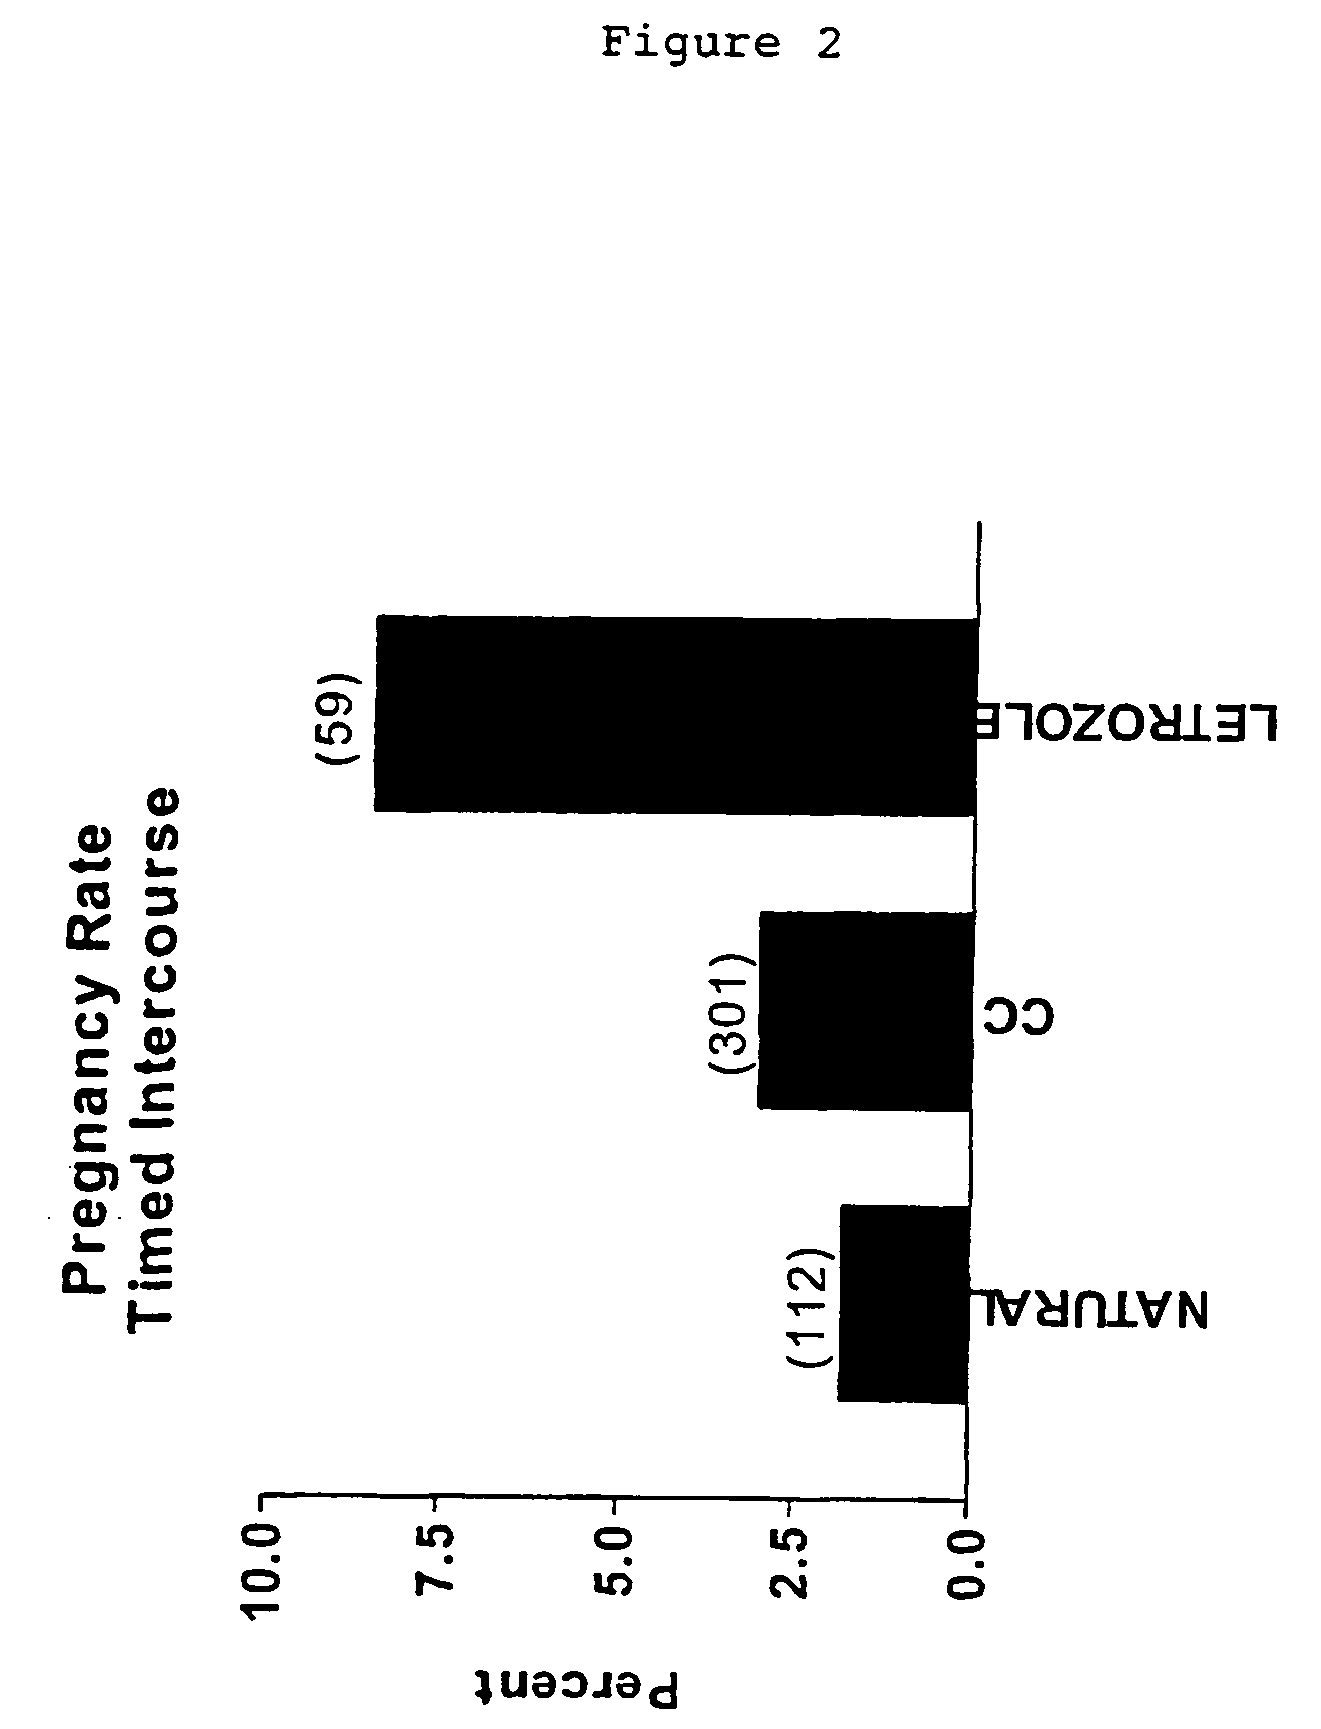 Multiple dose aromatase inhibitor for treating infertility